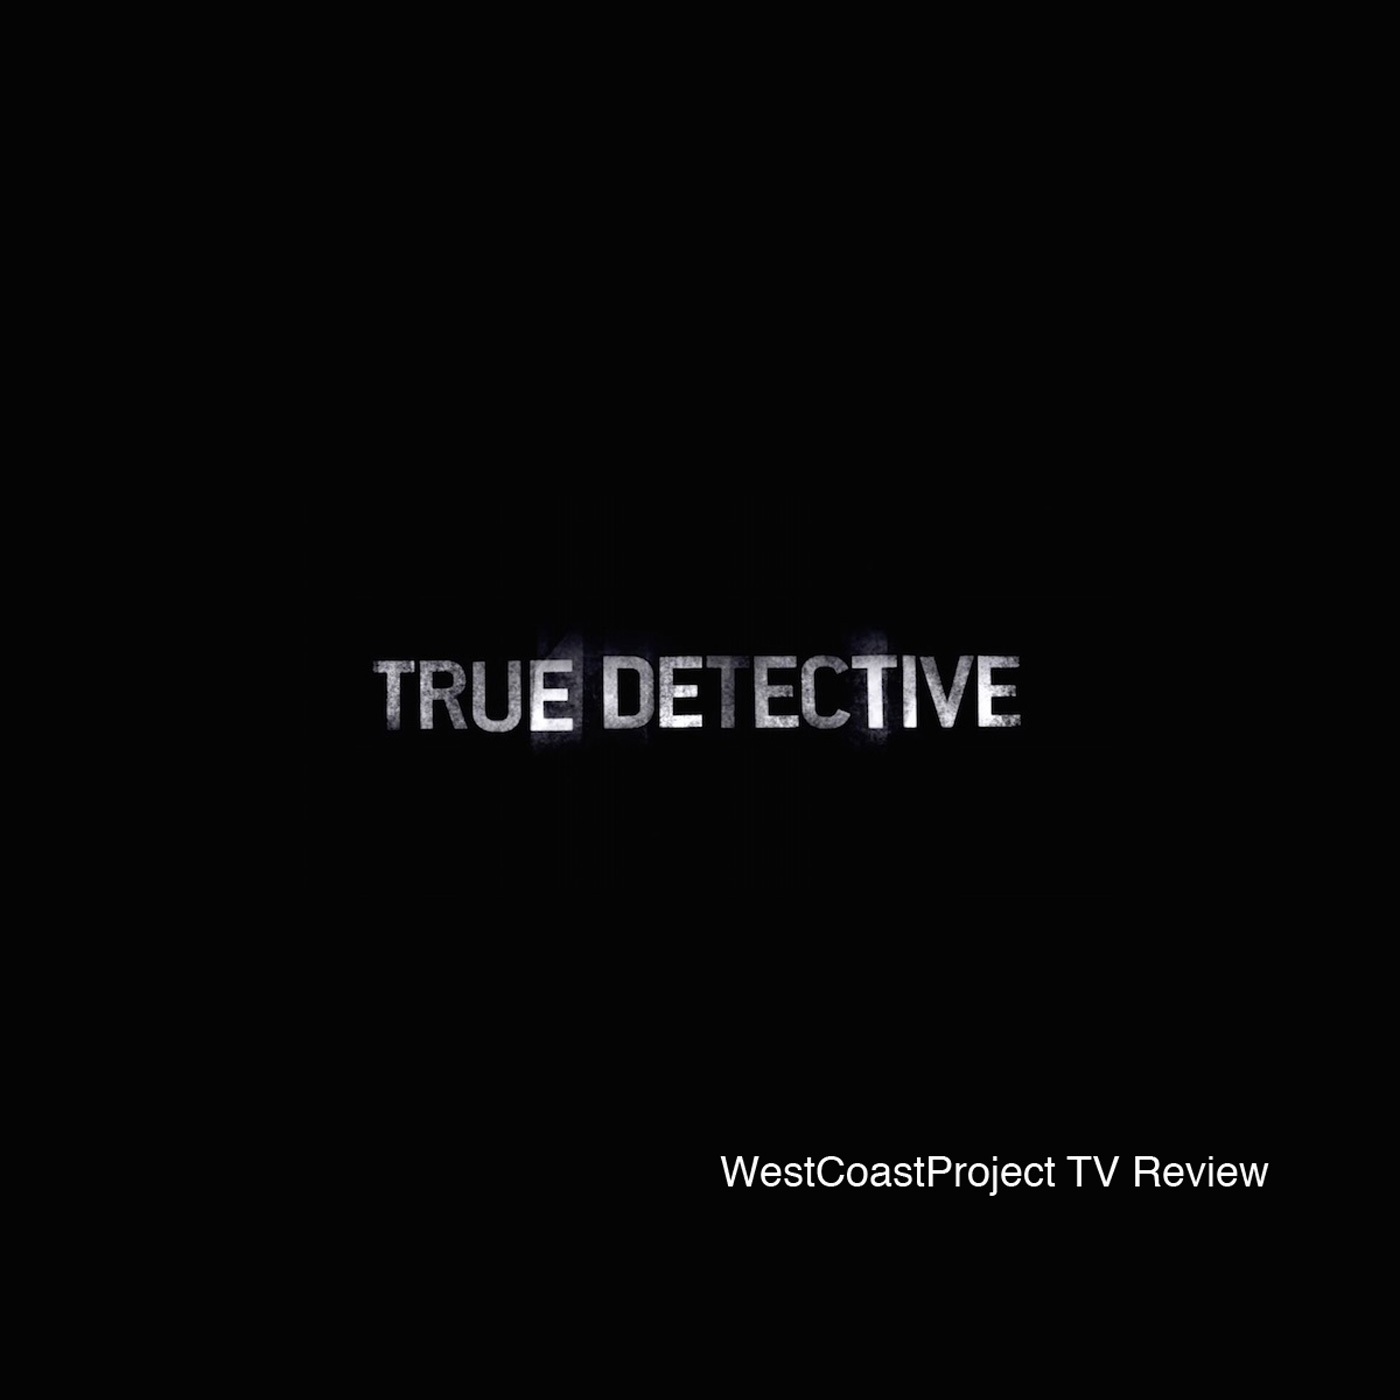 True Detective TV Project